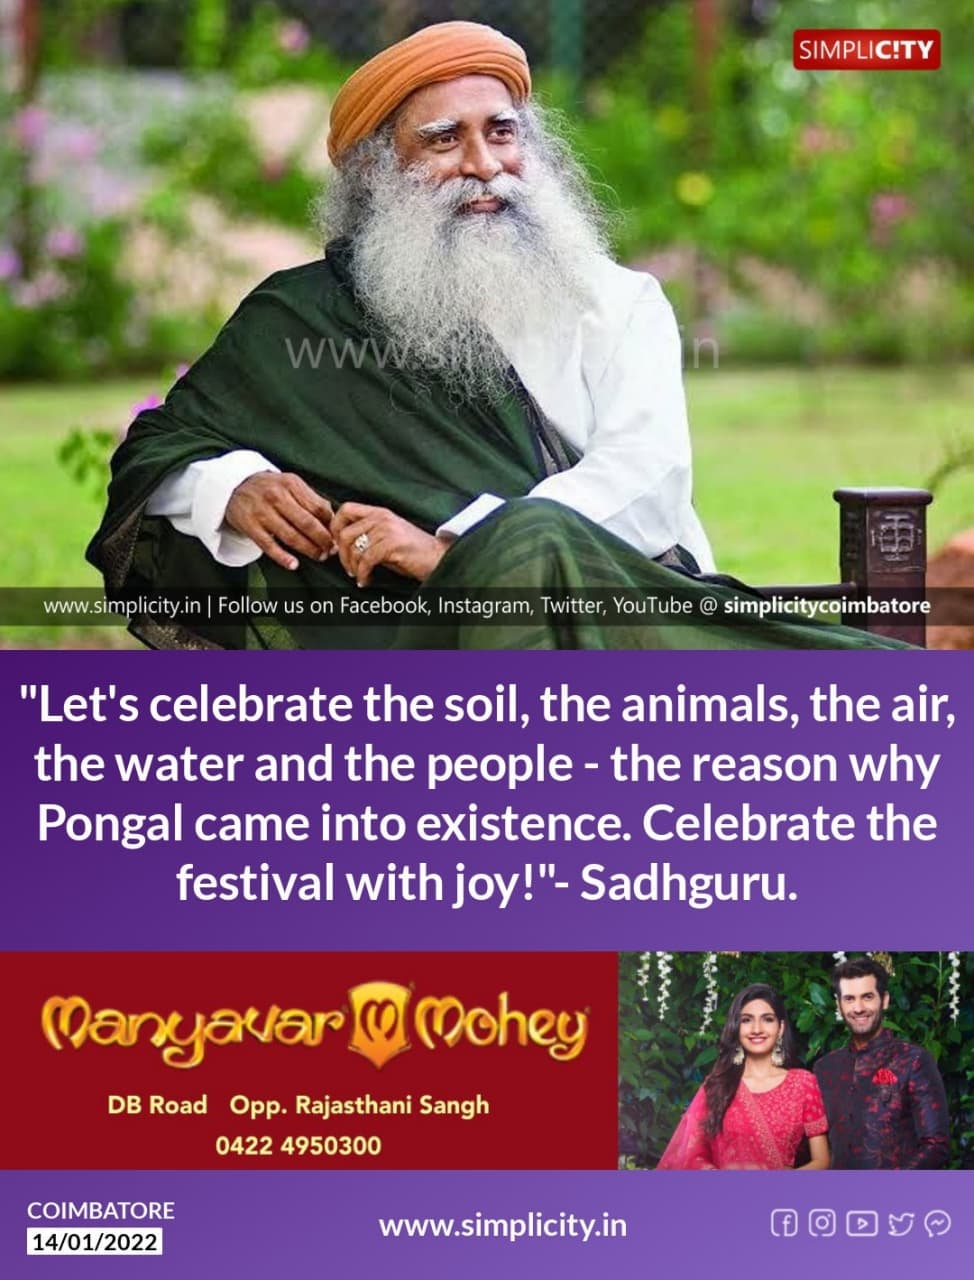 Sadhguru wishes people on Pongal - the Harvest Festival. - Simplicity